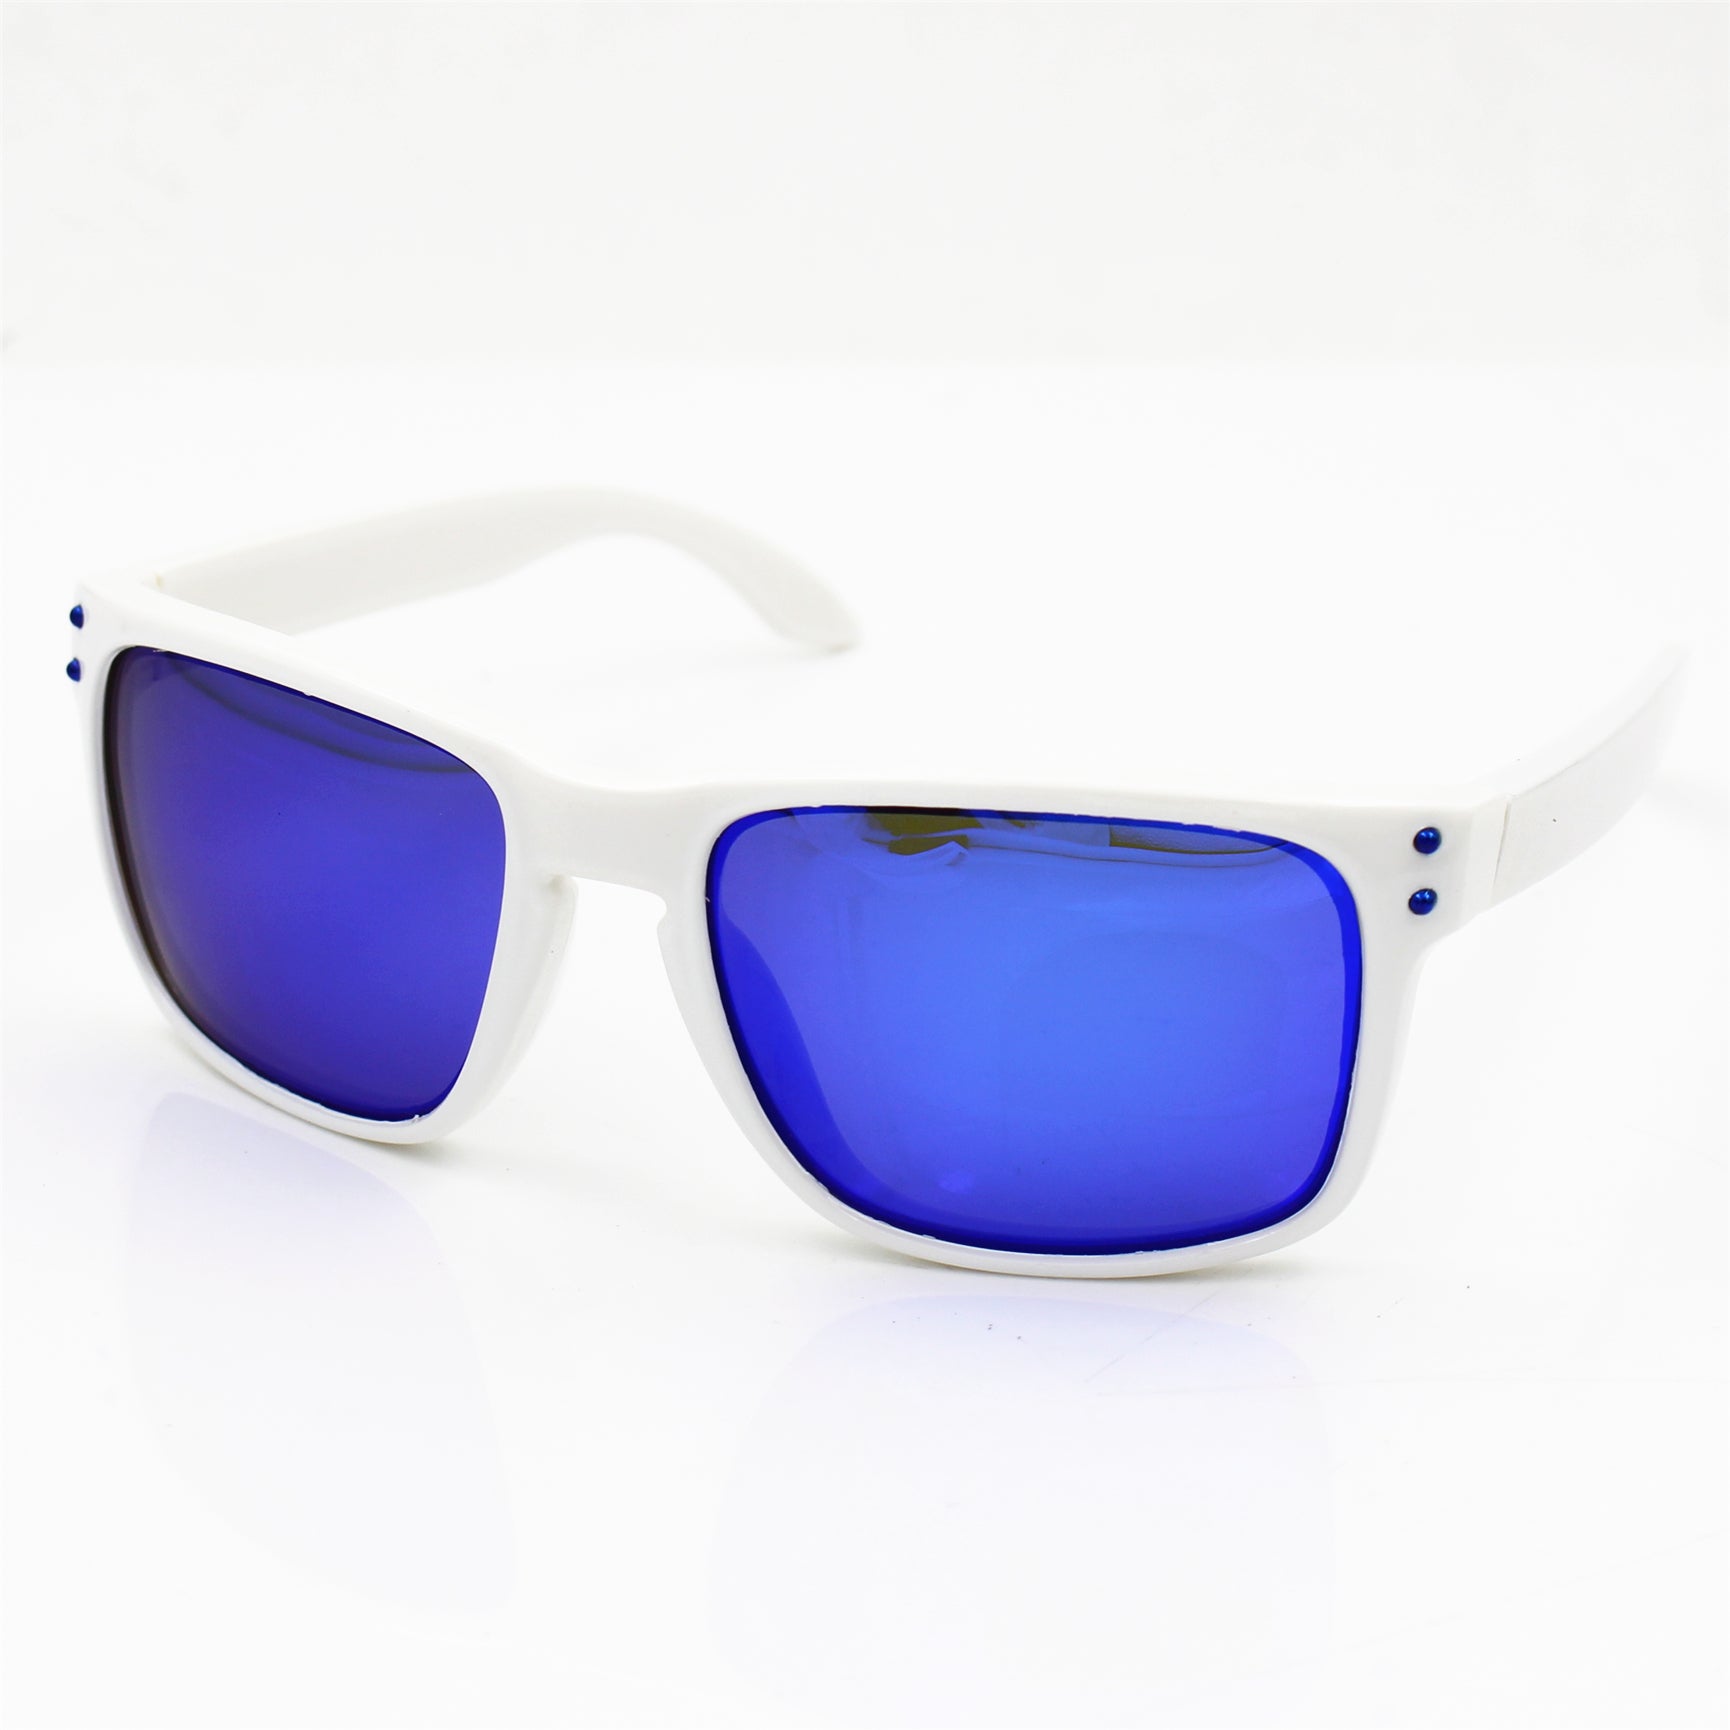 Men's Sports Polarized Sunglasses Square Frame Glasses